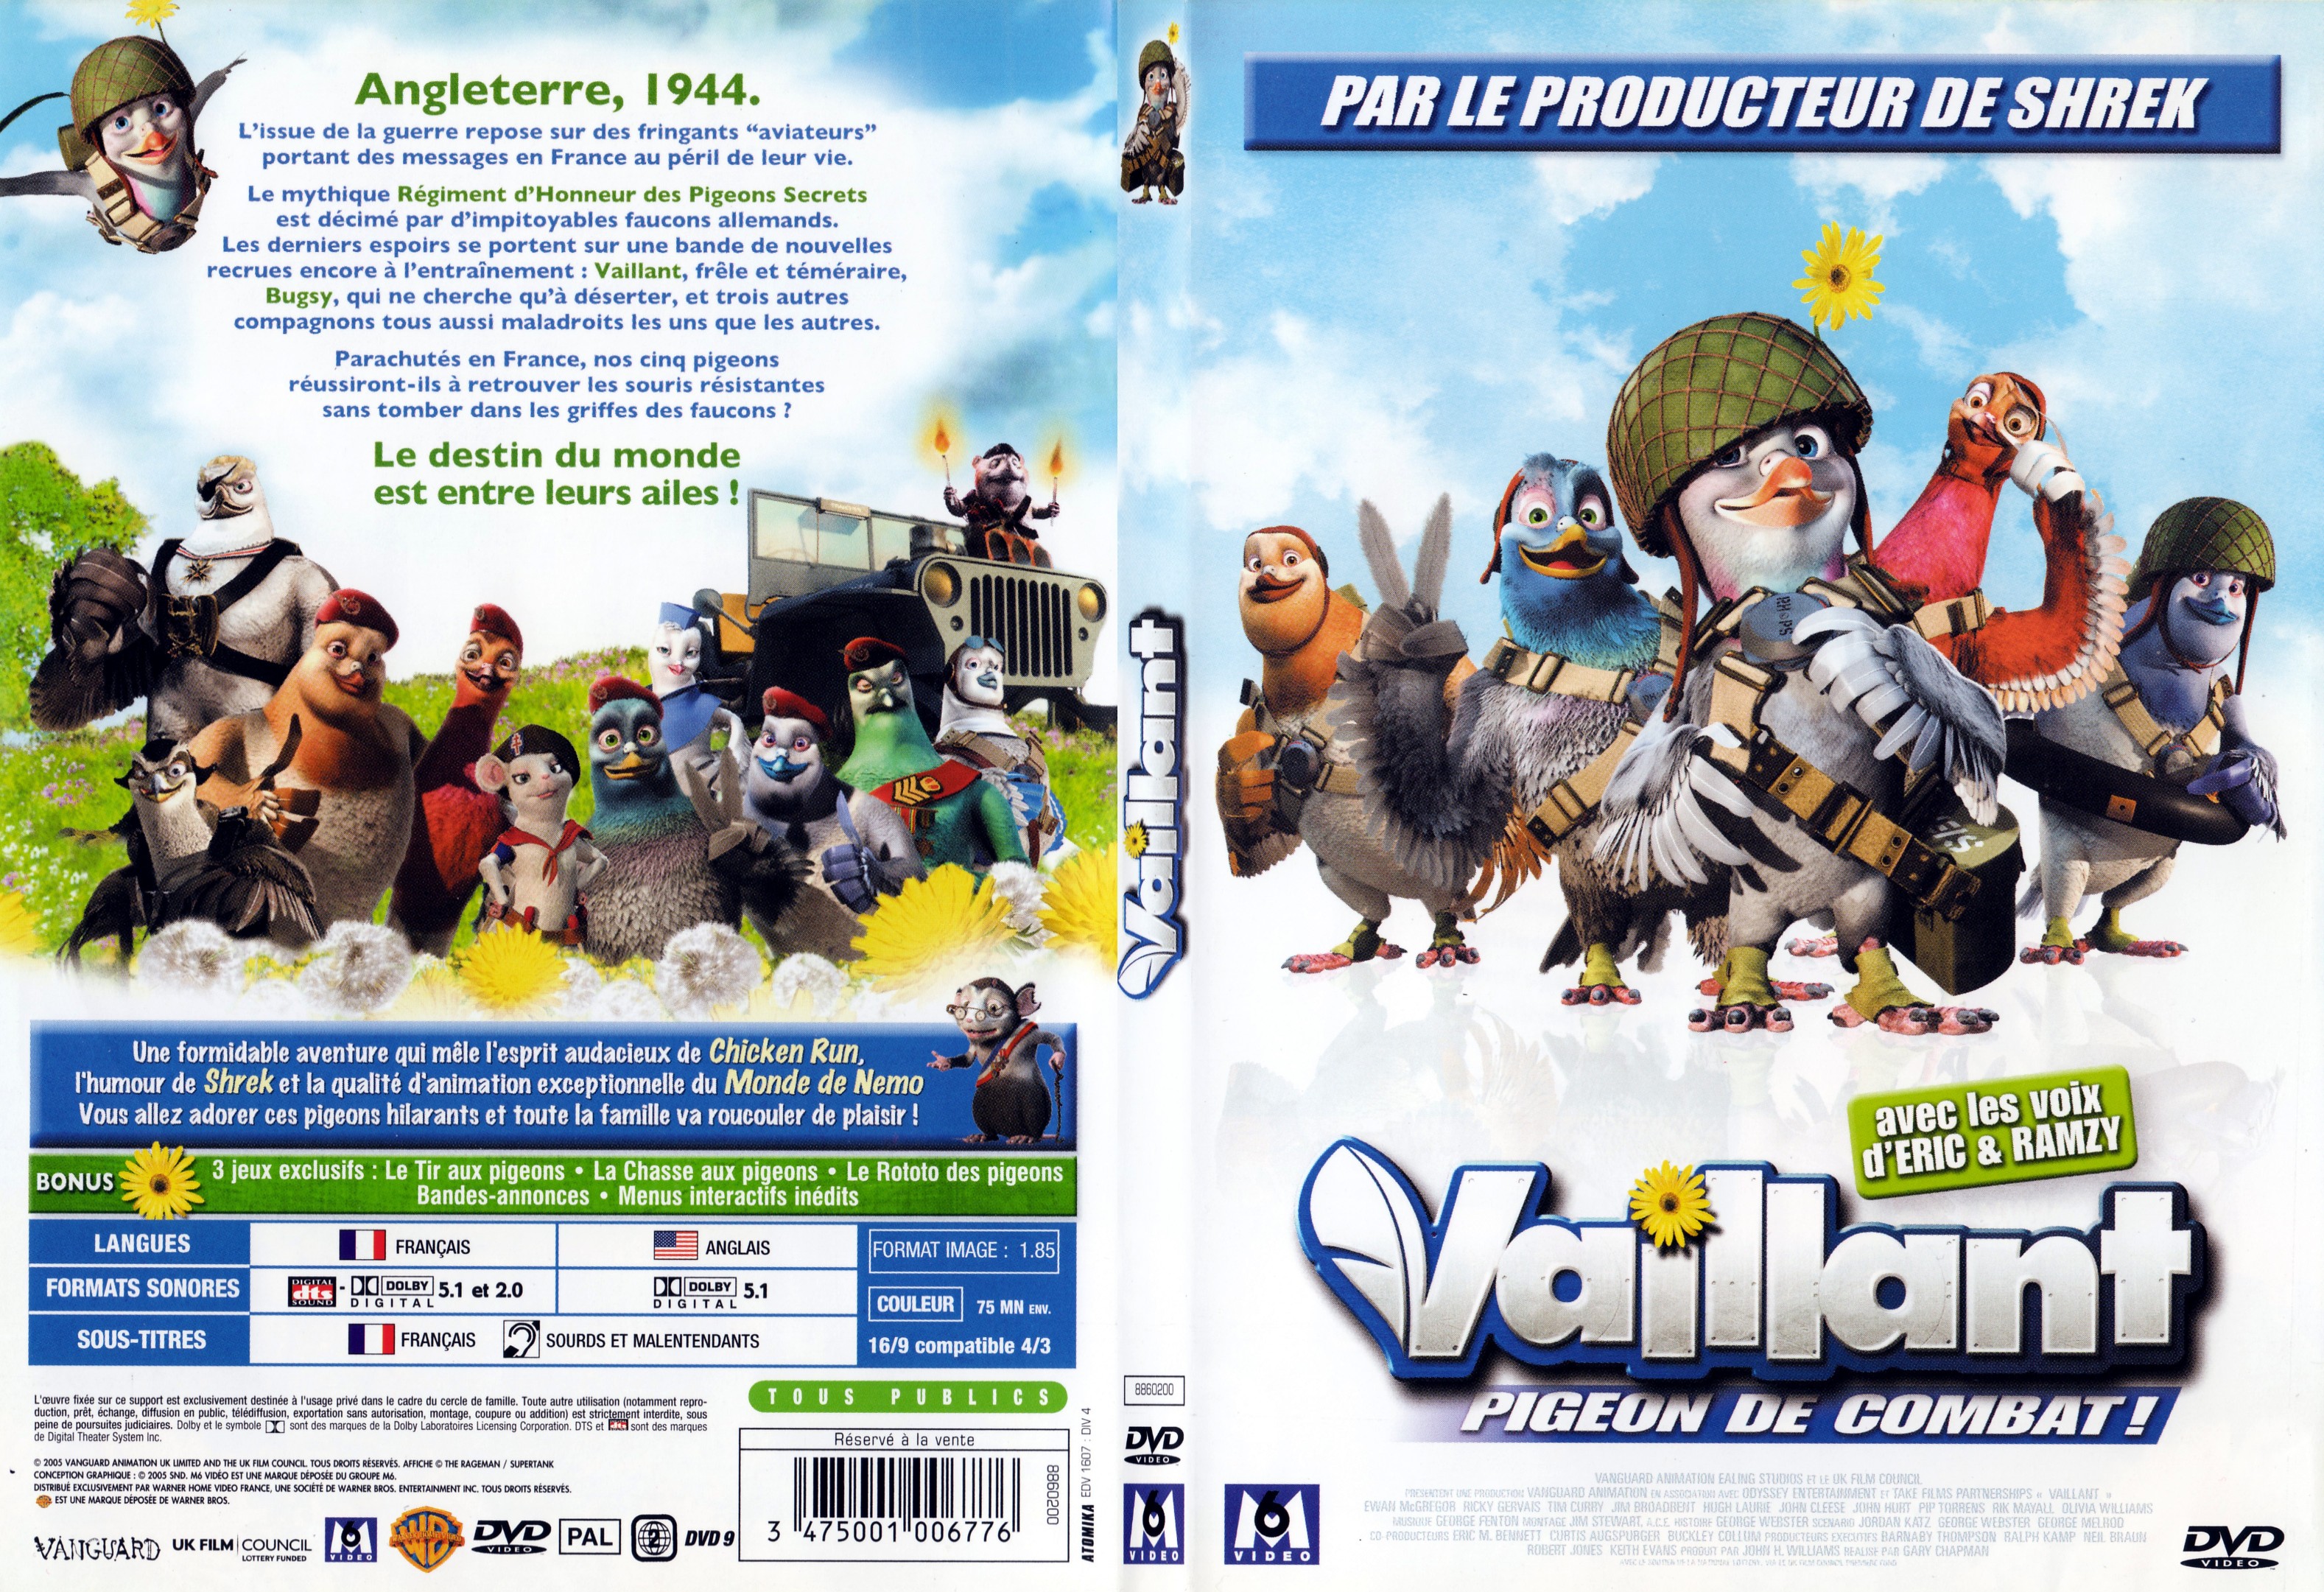 Jaquette DVD Vaillant pigeon de combat - SLIM